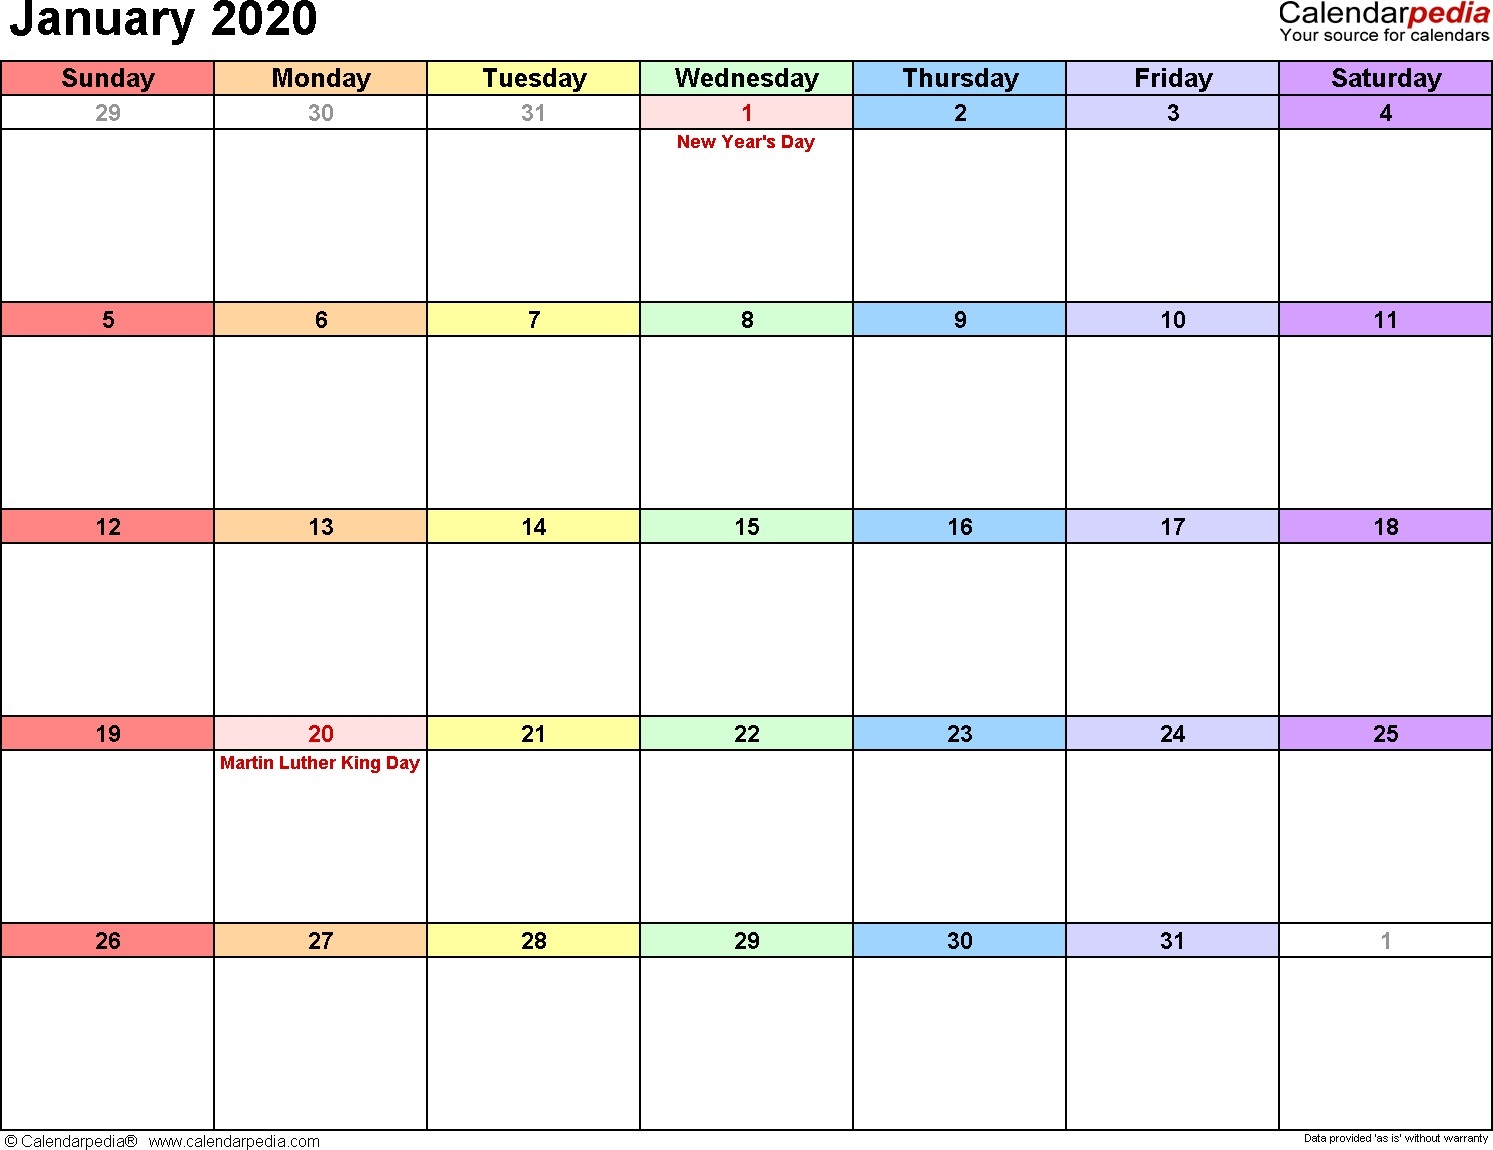 January 2020 Calendar | Jcreview Perky Tamil Calendar 2020 January